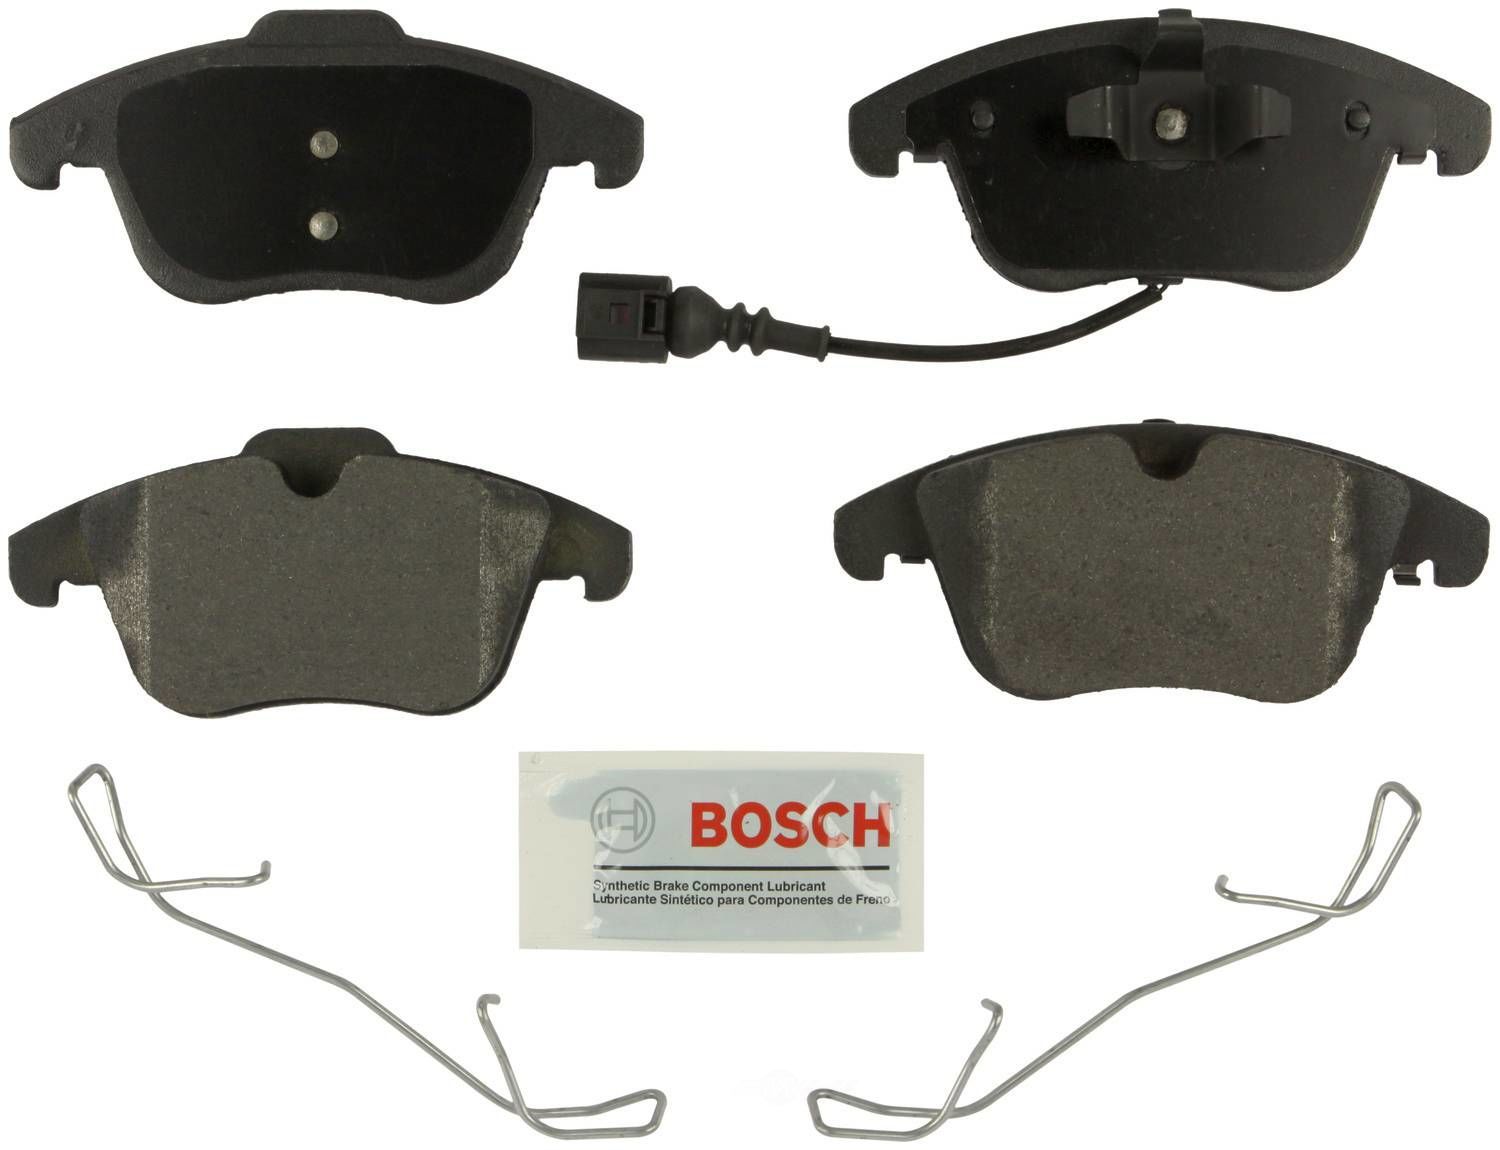 BOSCH BRAKE - Bosch Blue Semi-Metallic Brake Pads with Hardware (Front) - BQC BE1375H